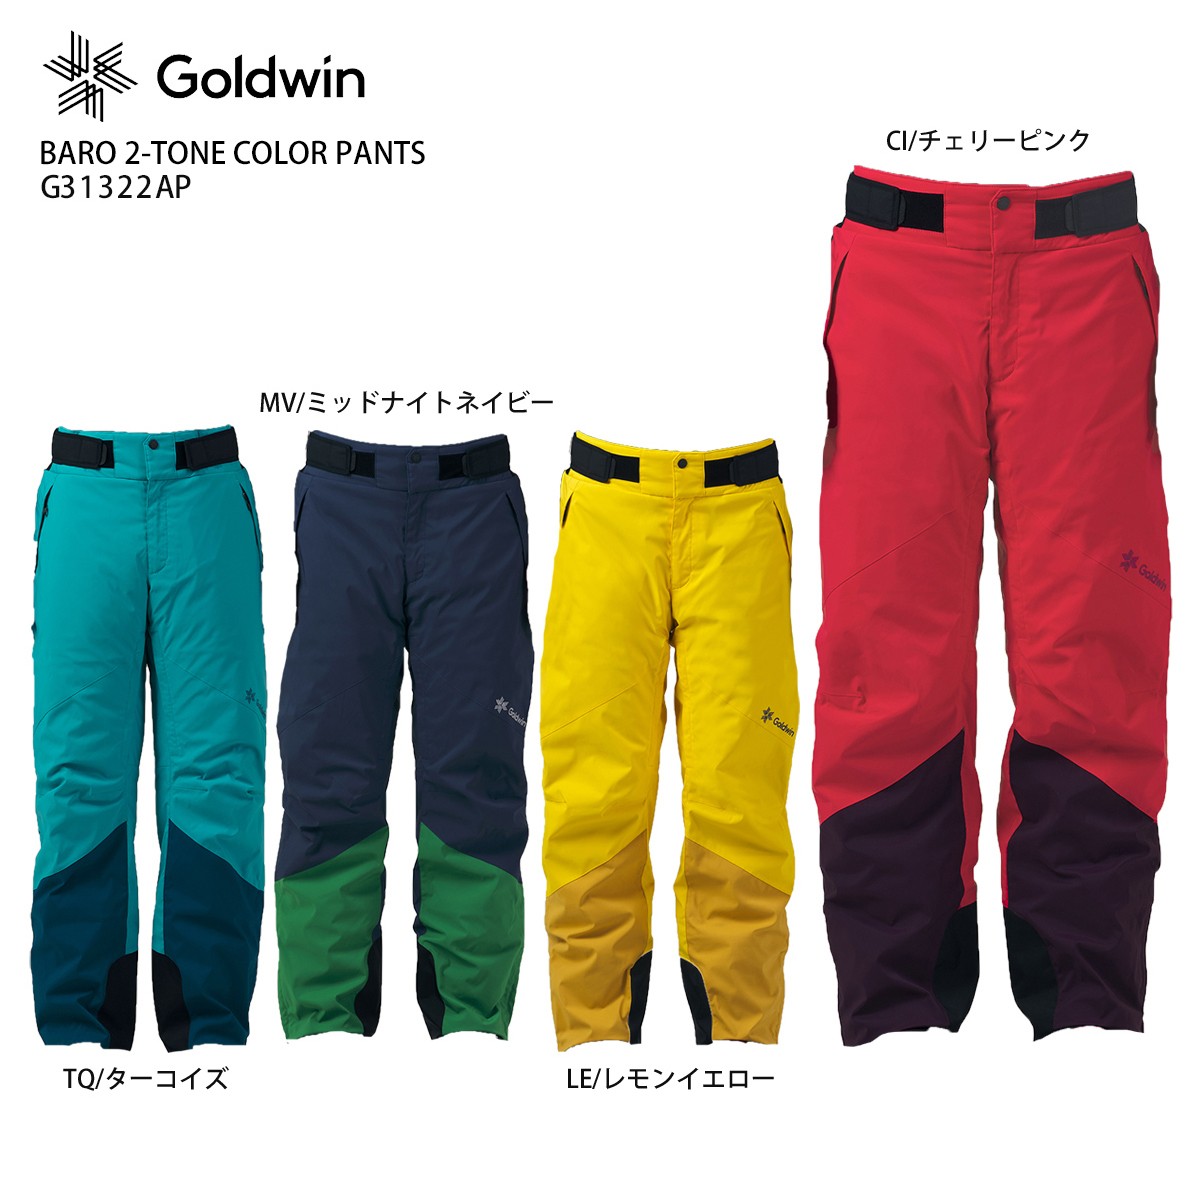 Ski Jackets & Ski Pants】GOLDWIN - Skis & Ski Gear - World 